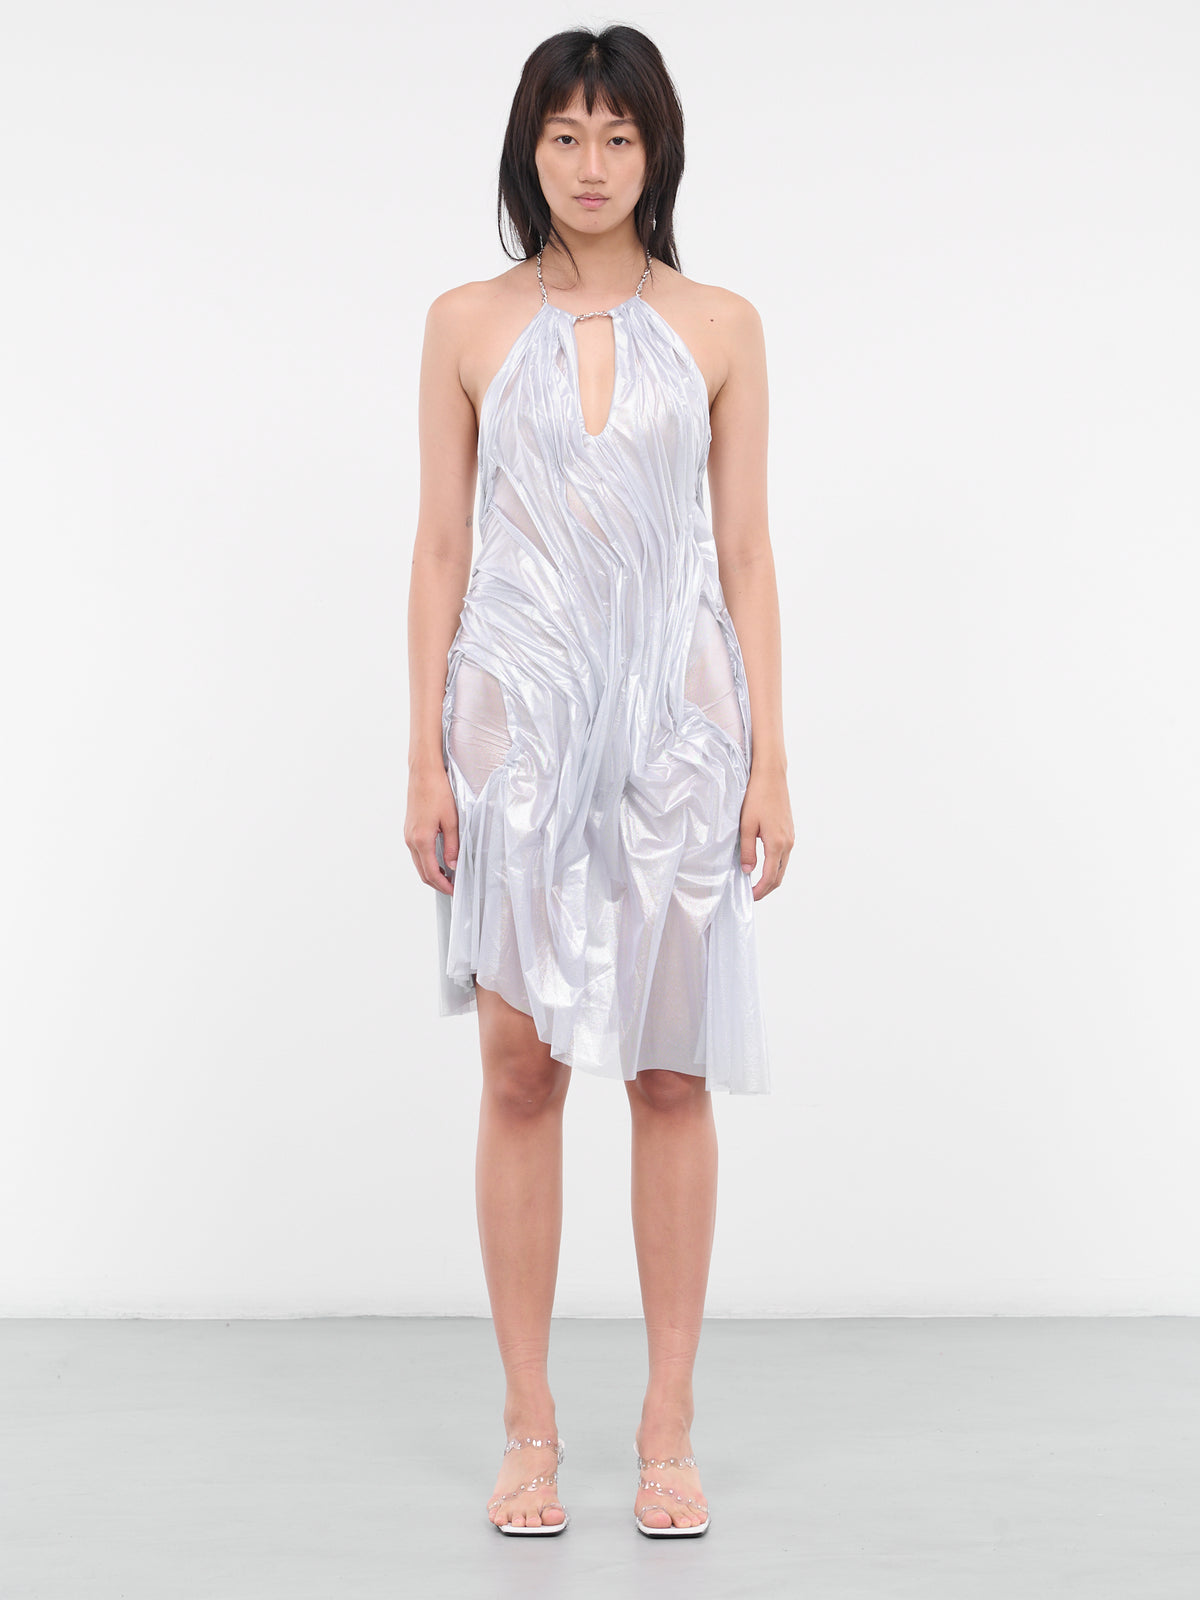 Wet Midi Dress (MOON-WETLOOK-METALLIC-SILVER)